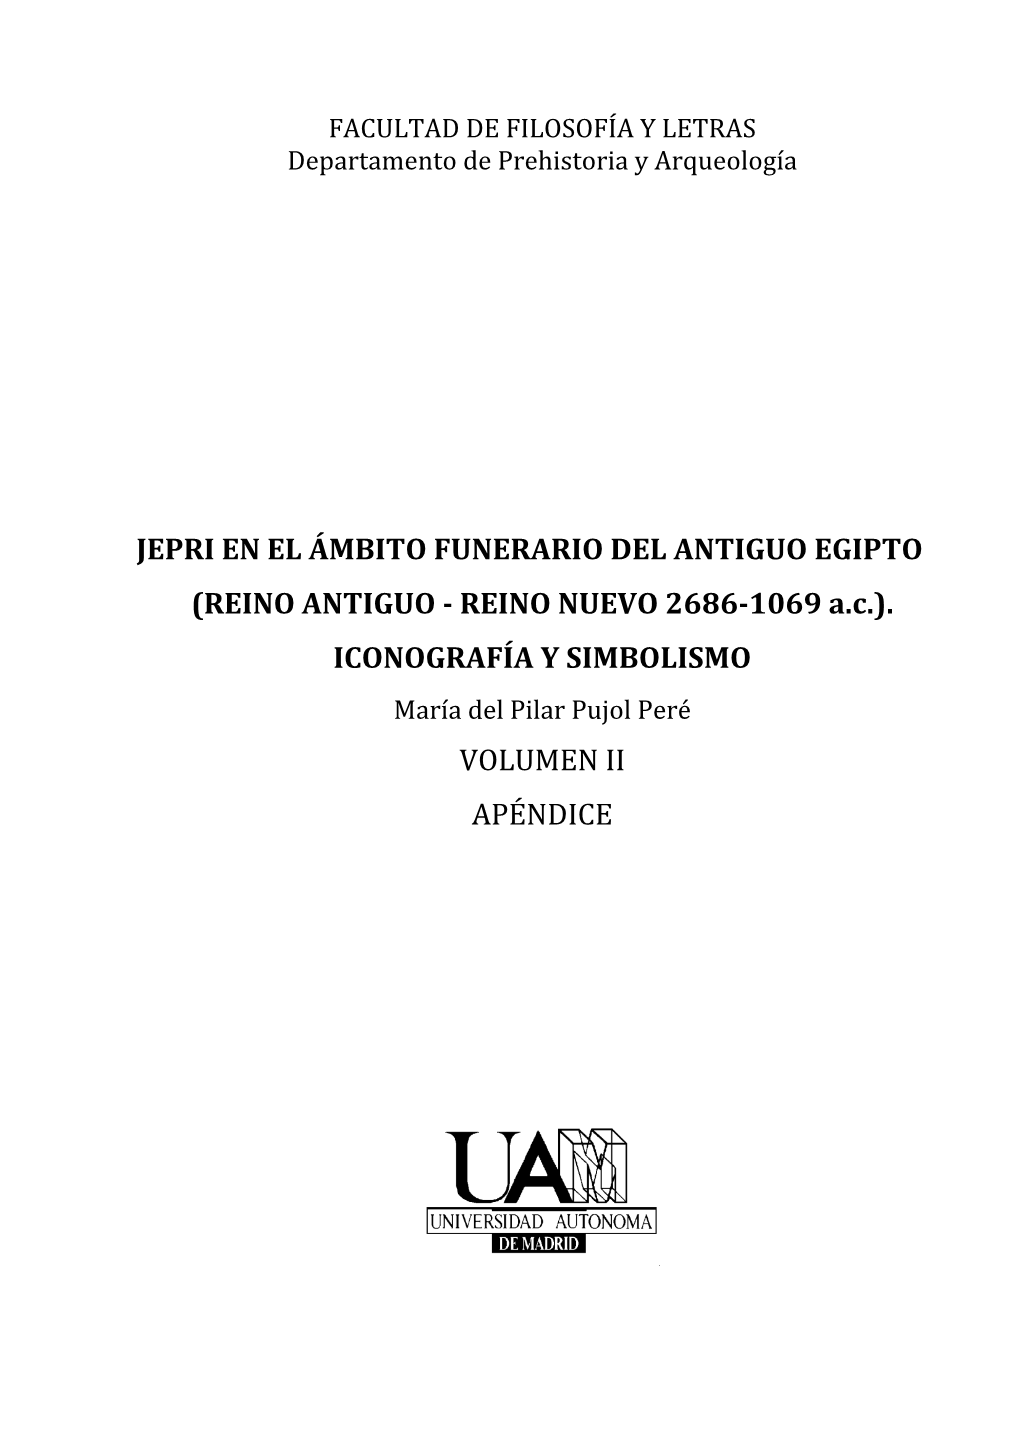 JEPRI EN EL ÁMBITO FUNERARIO DEL ANTIGUO EGIPTO (REINO ANTIGUO - REINO NUEVO 2686-1069 A.C.)